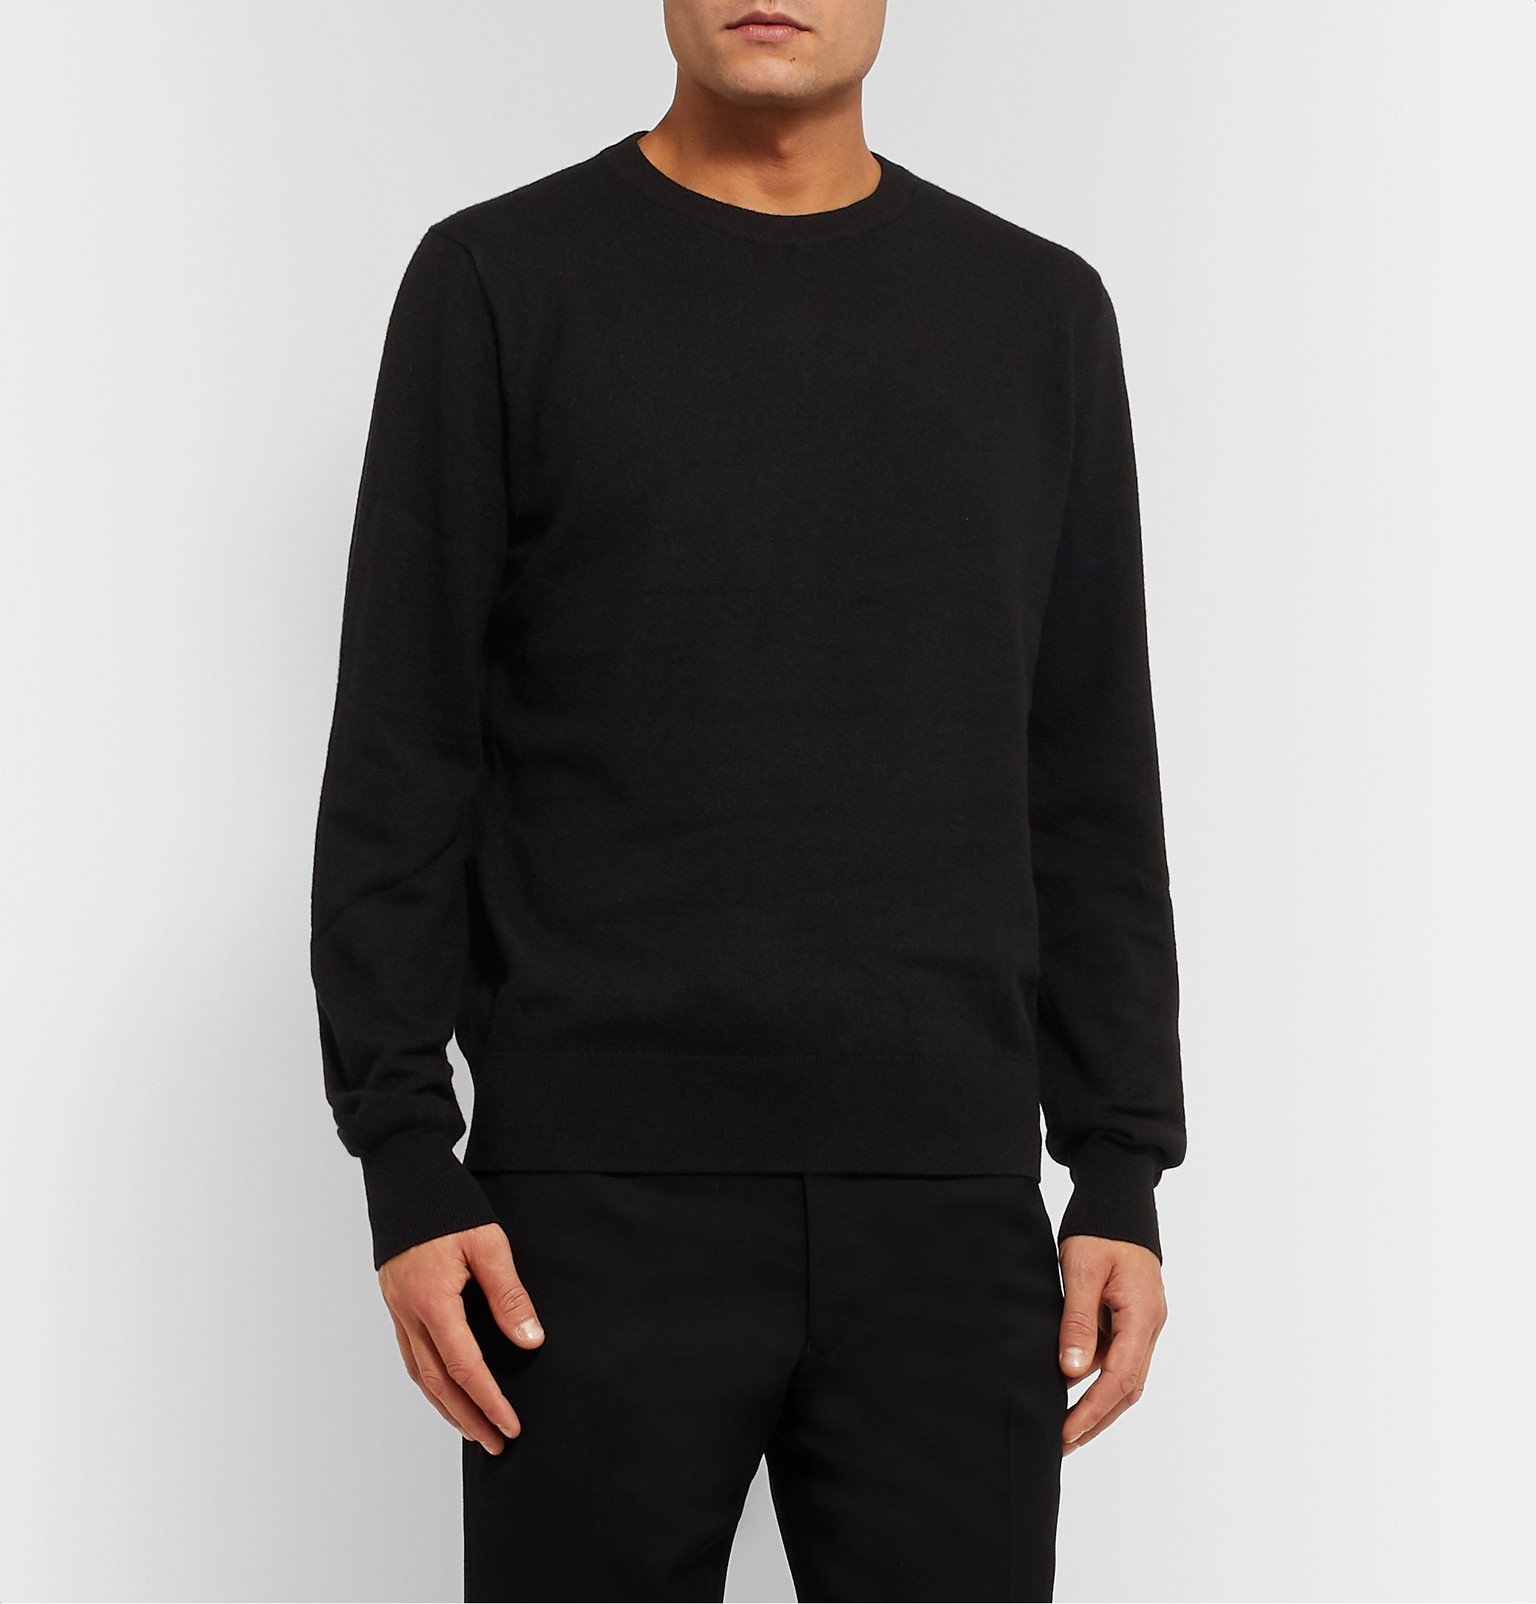 The Row - Benji Cashmere Sweater - Black The Row